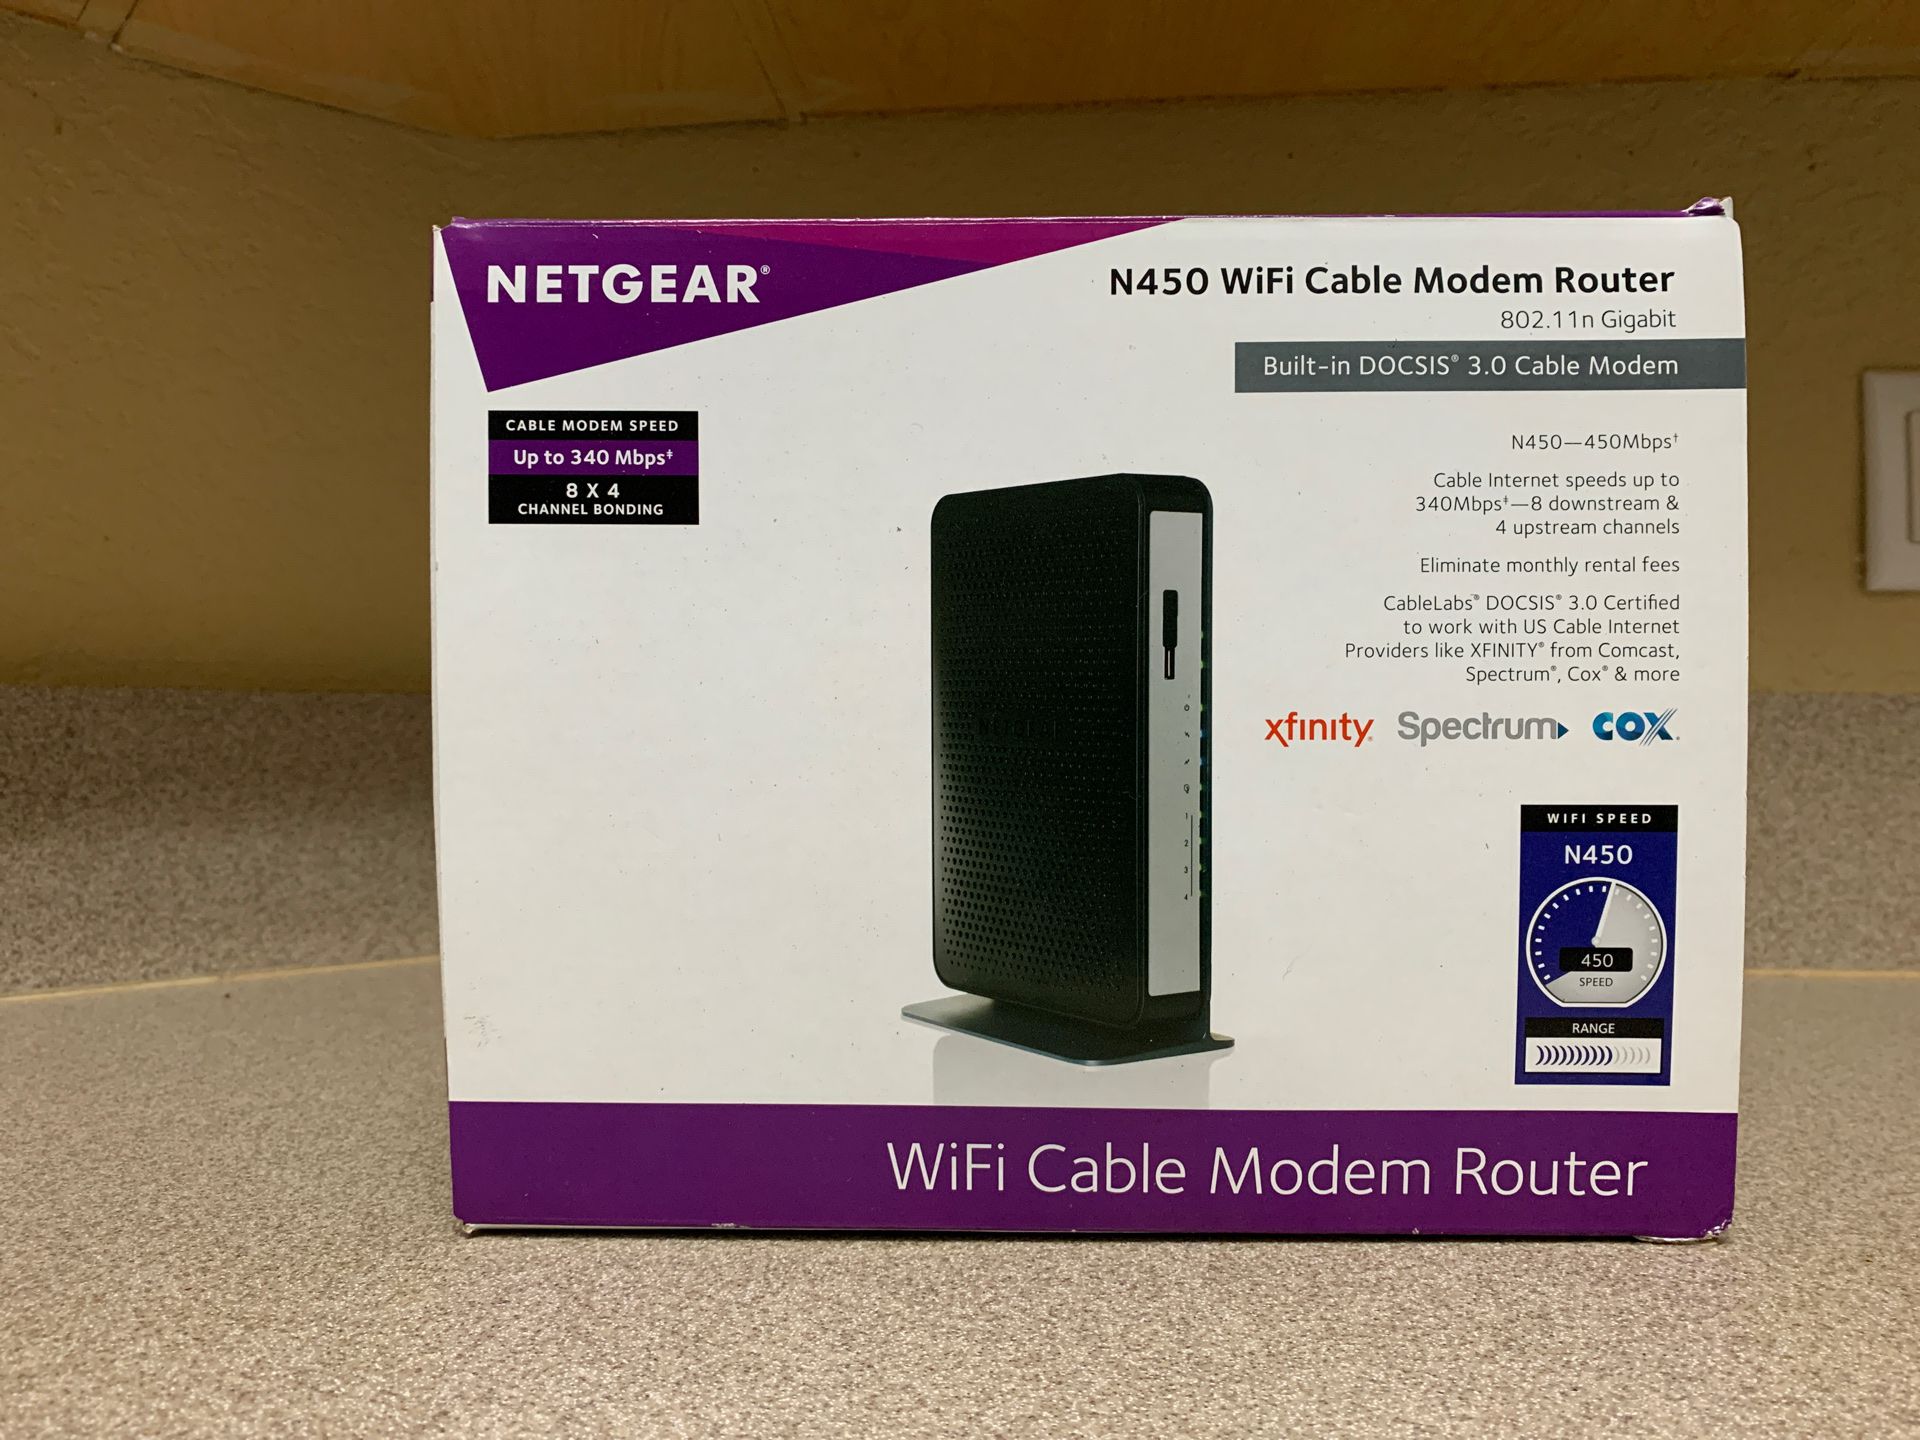 NETGEAR N450 WiFi Cable Modem Router